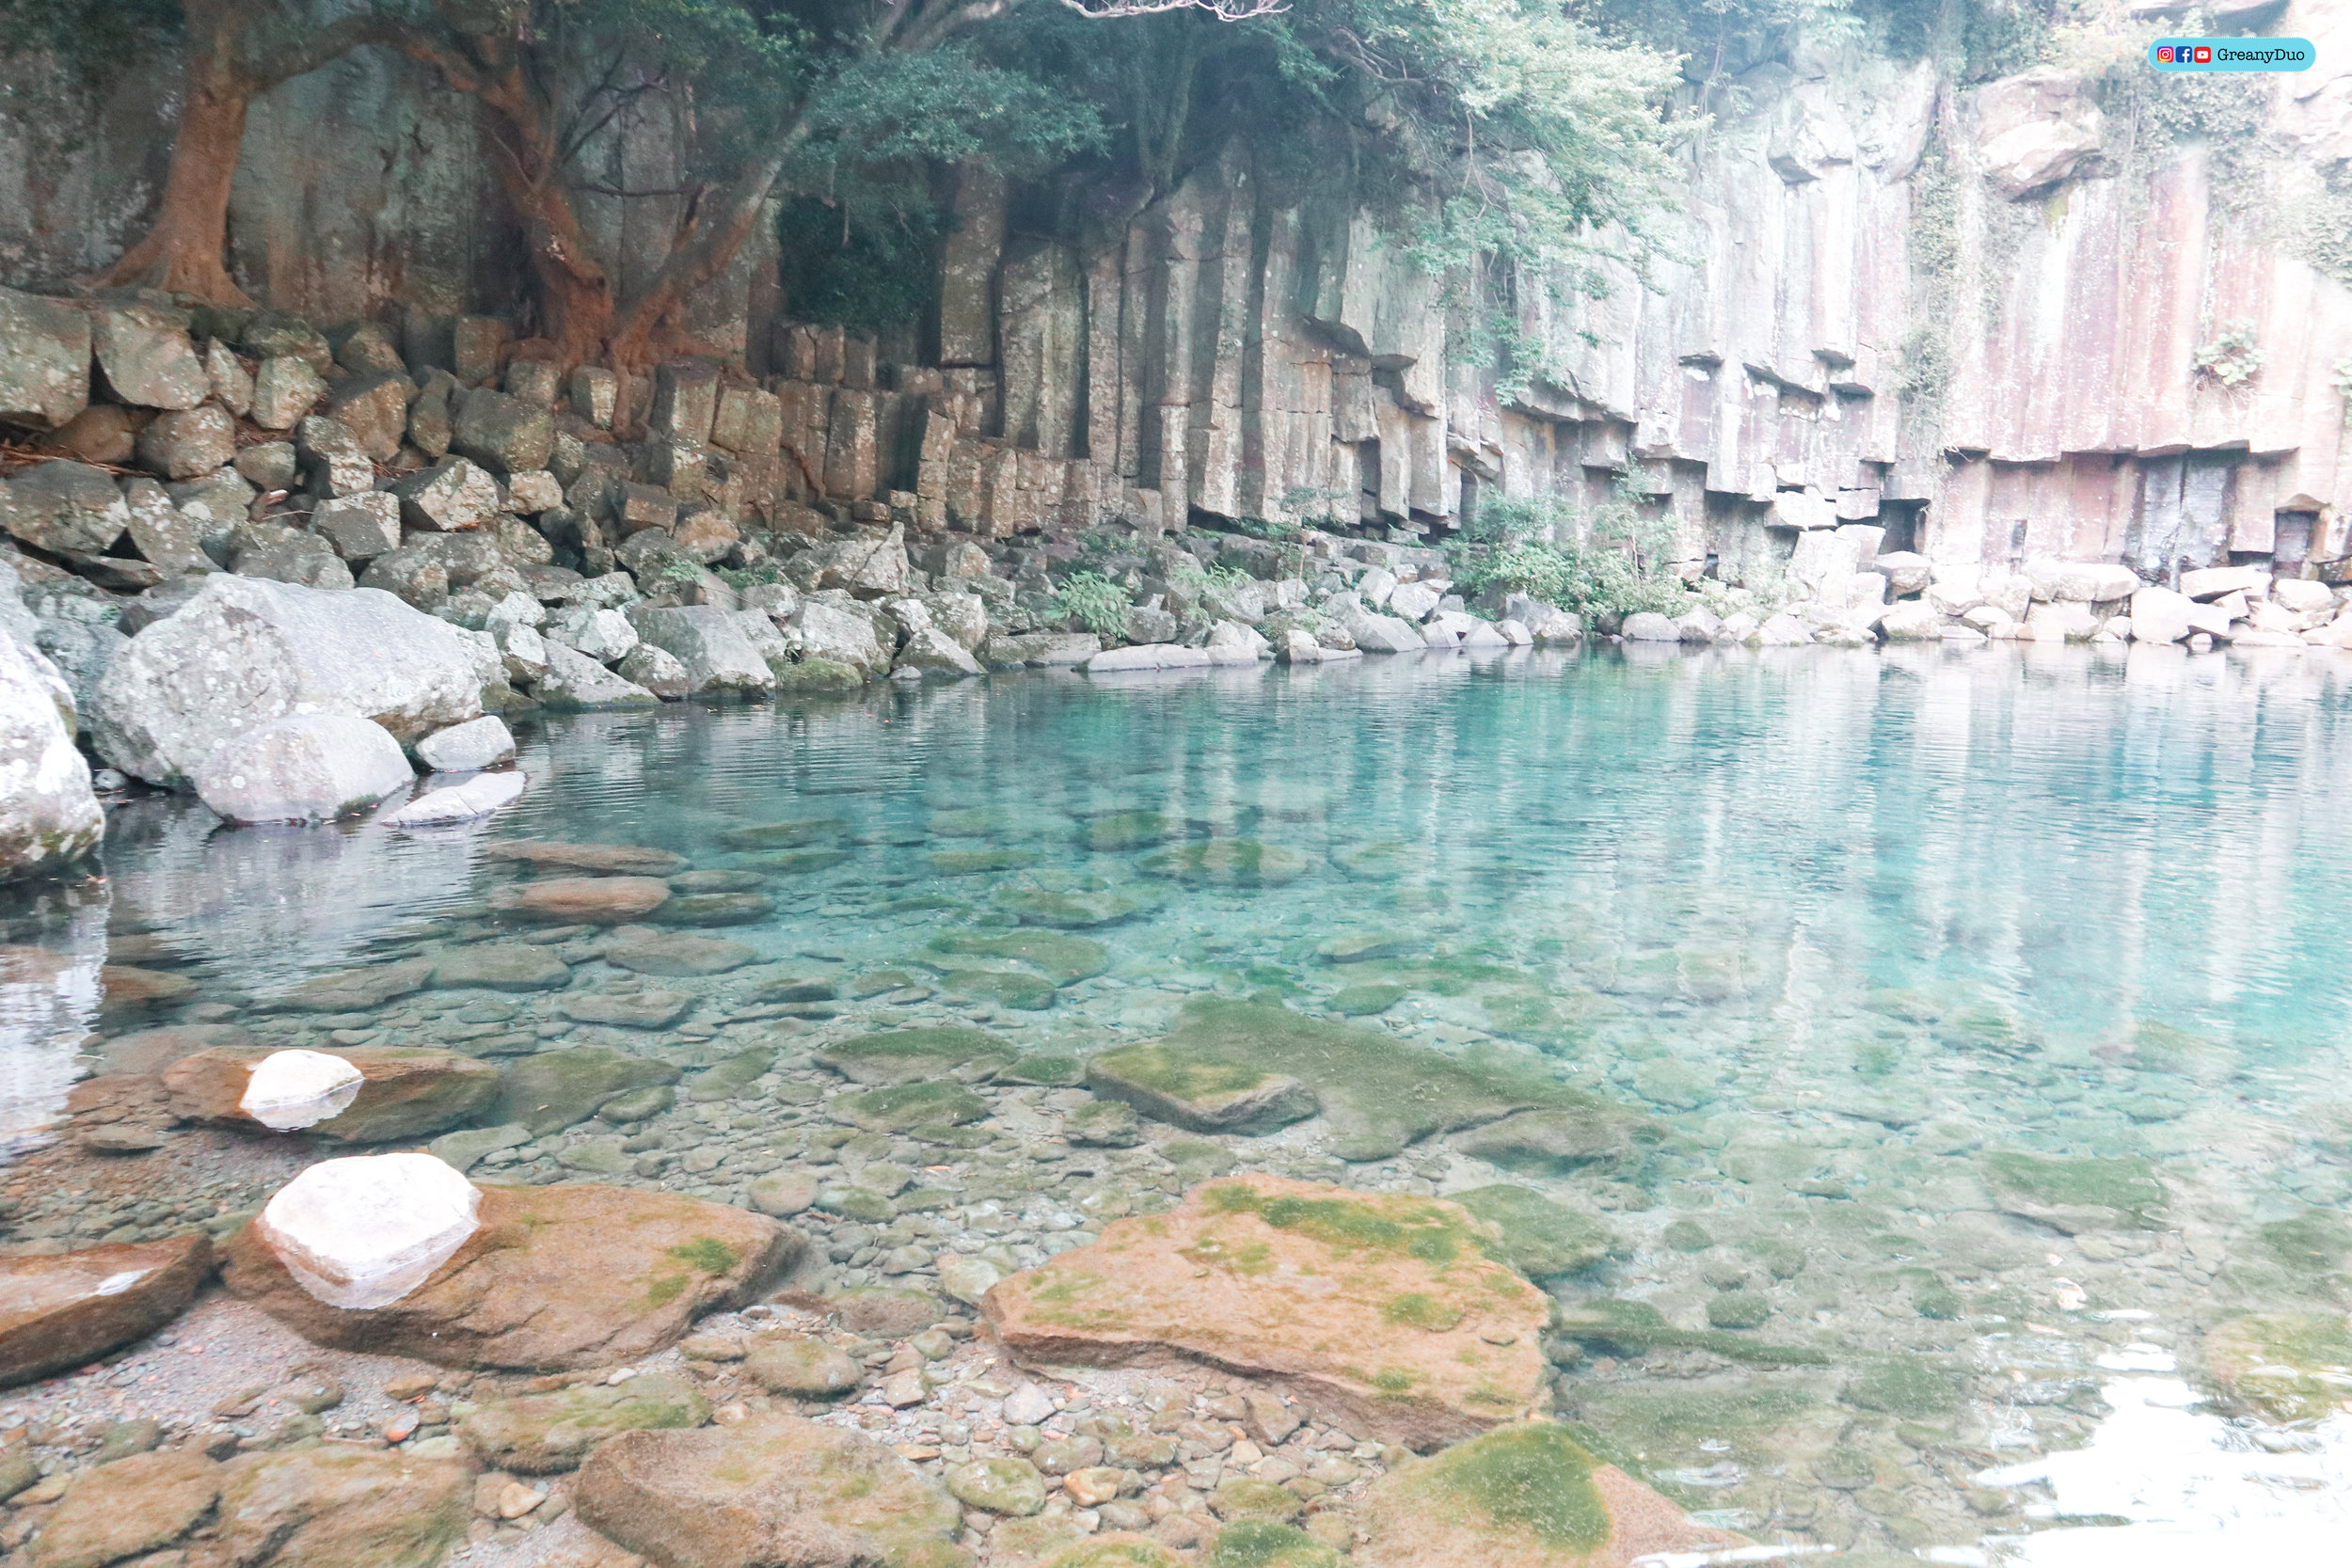 klook western jeju island tour, cheonjeyeon waterfalls